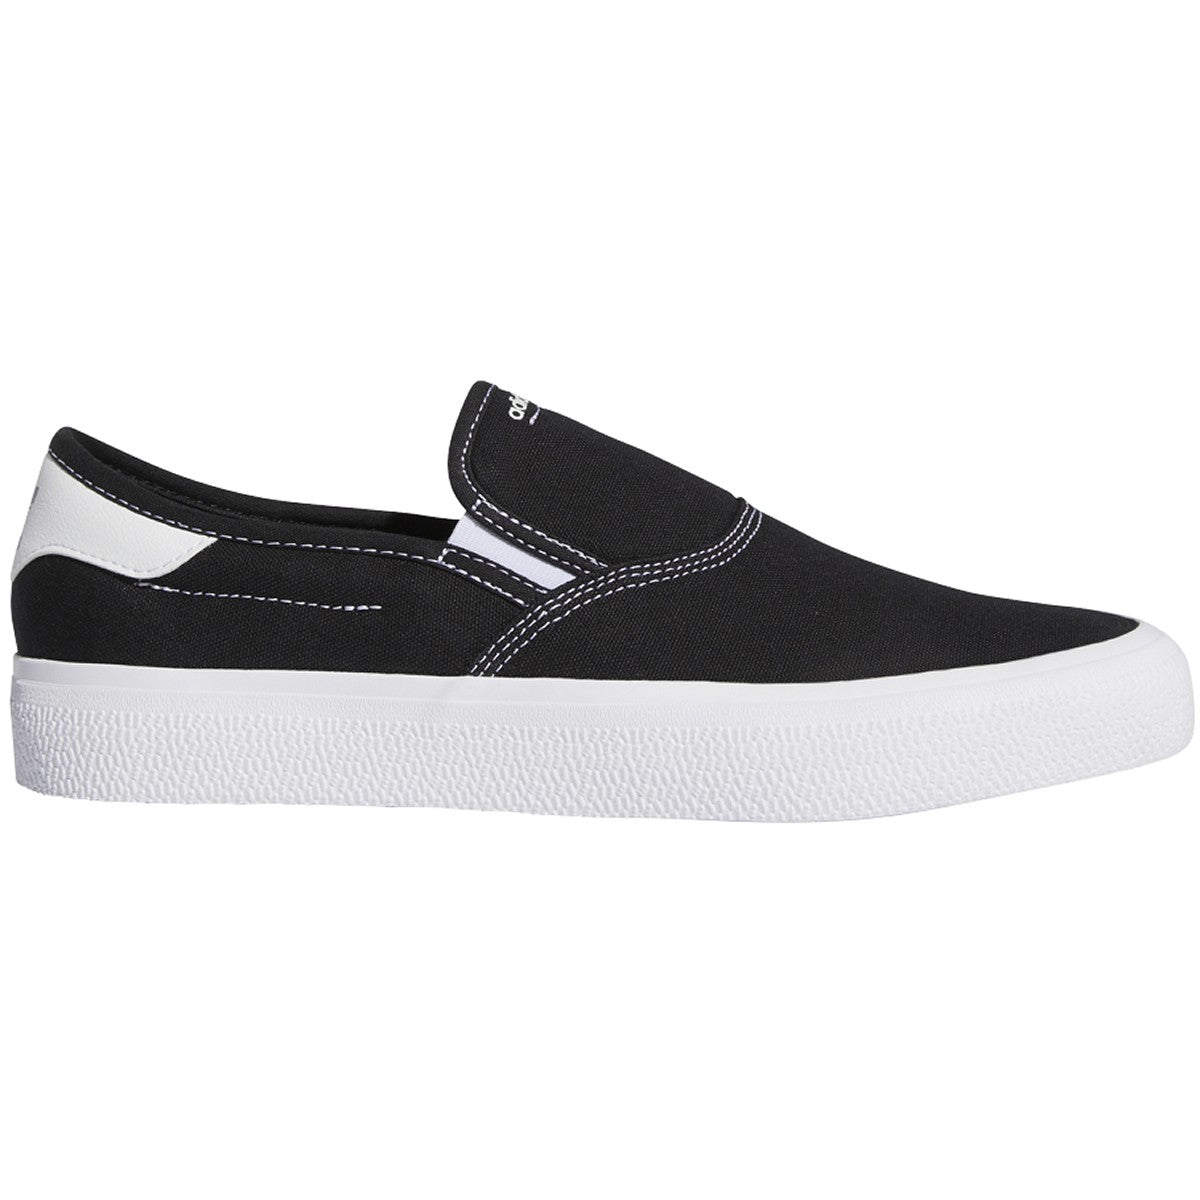 Black/White Canvas 3MC Slip Adidas Skateboarding Shoes